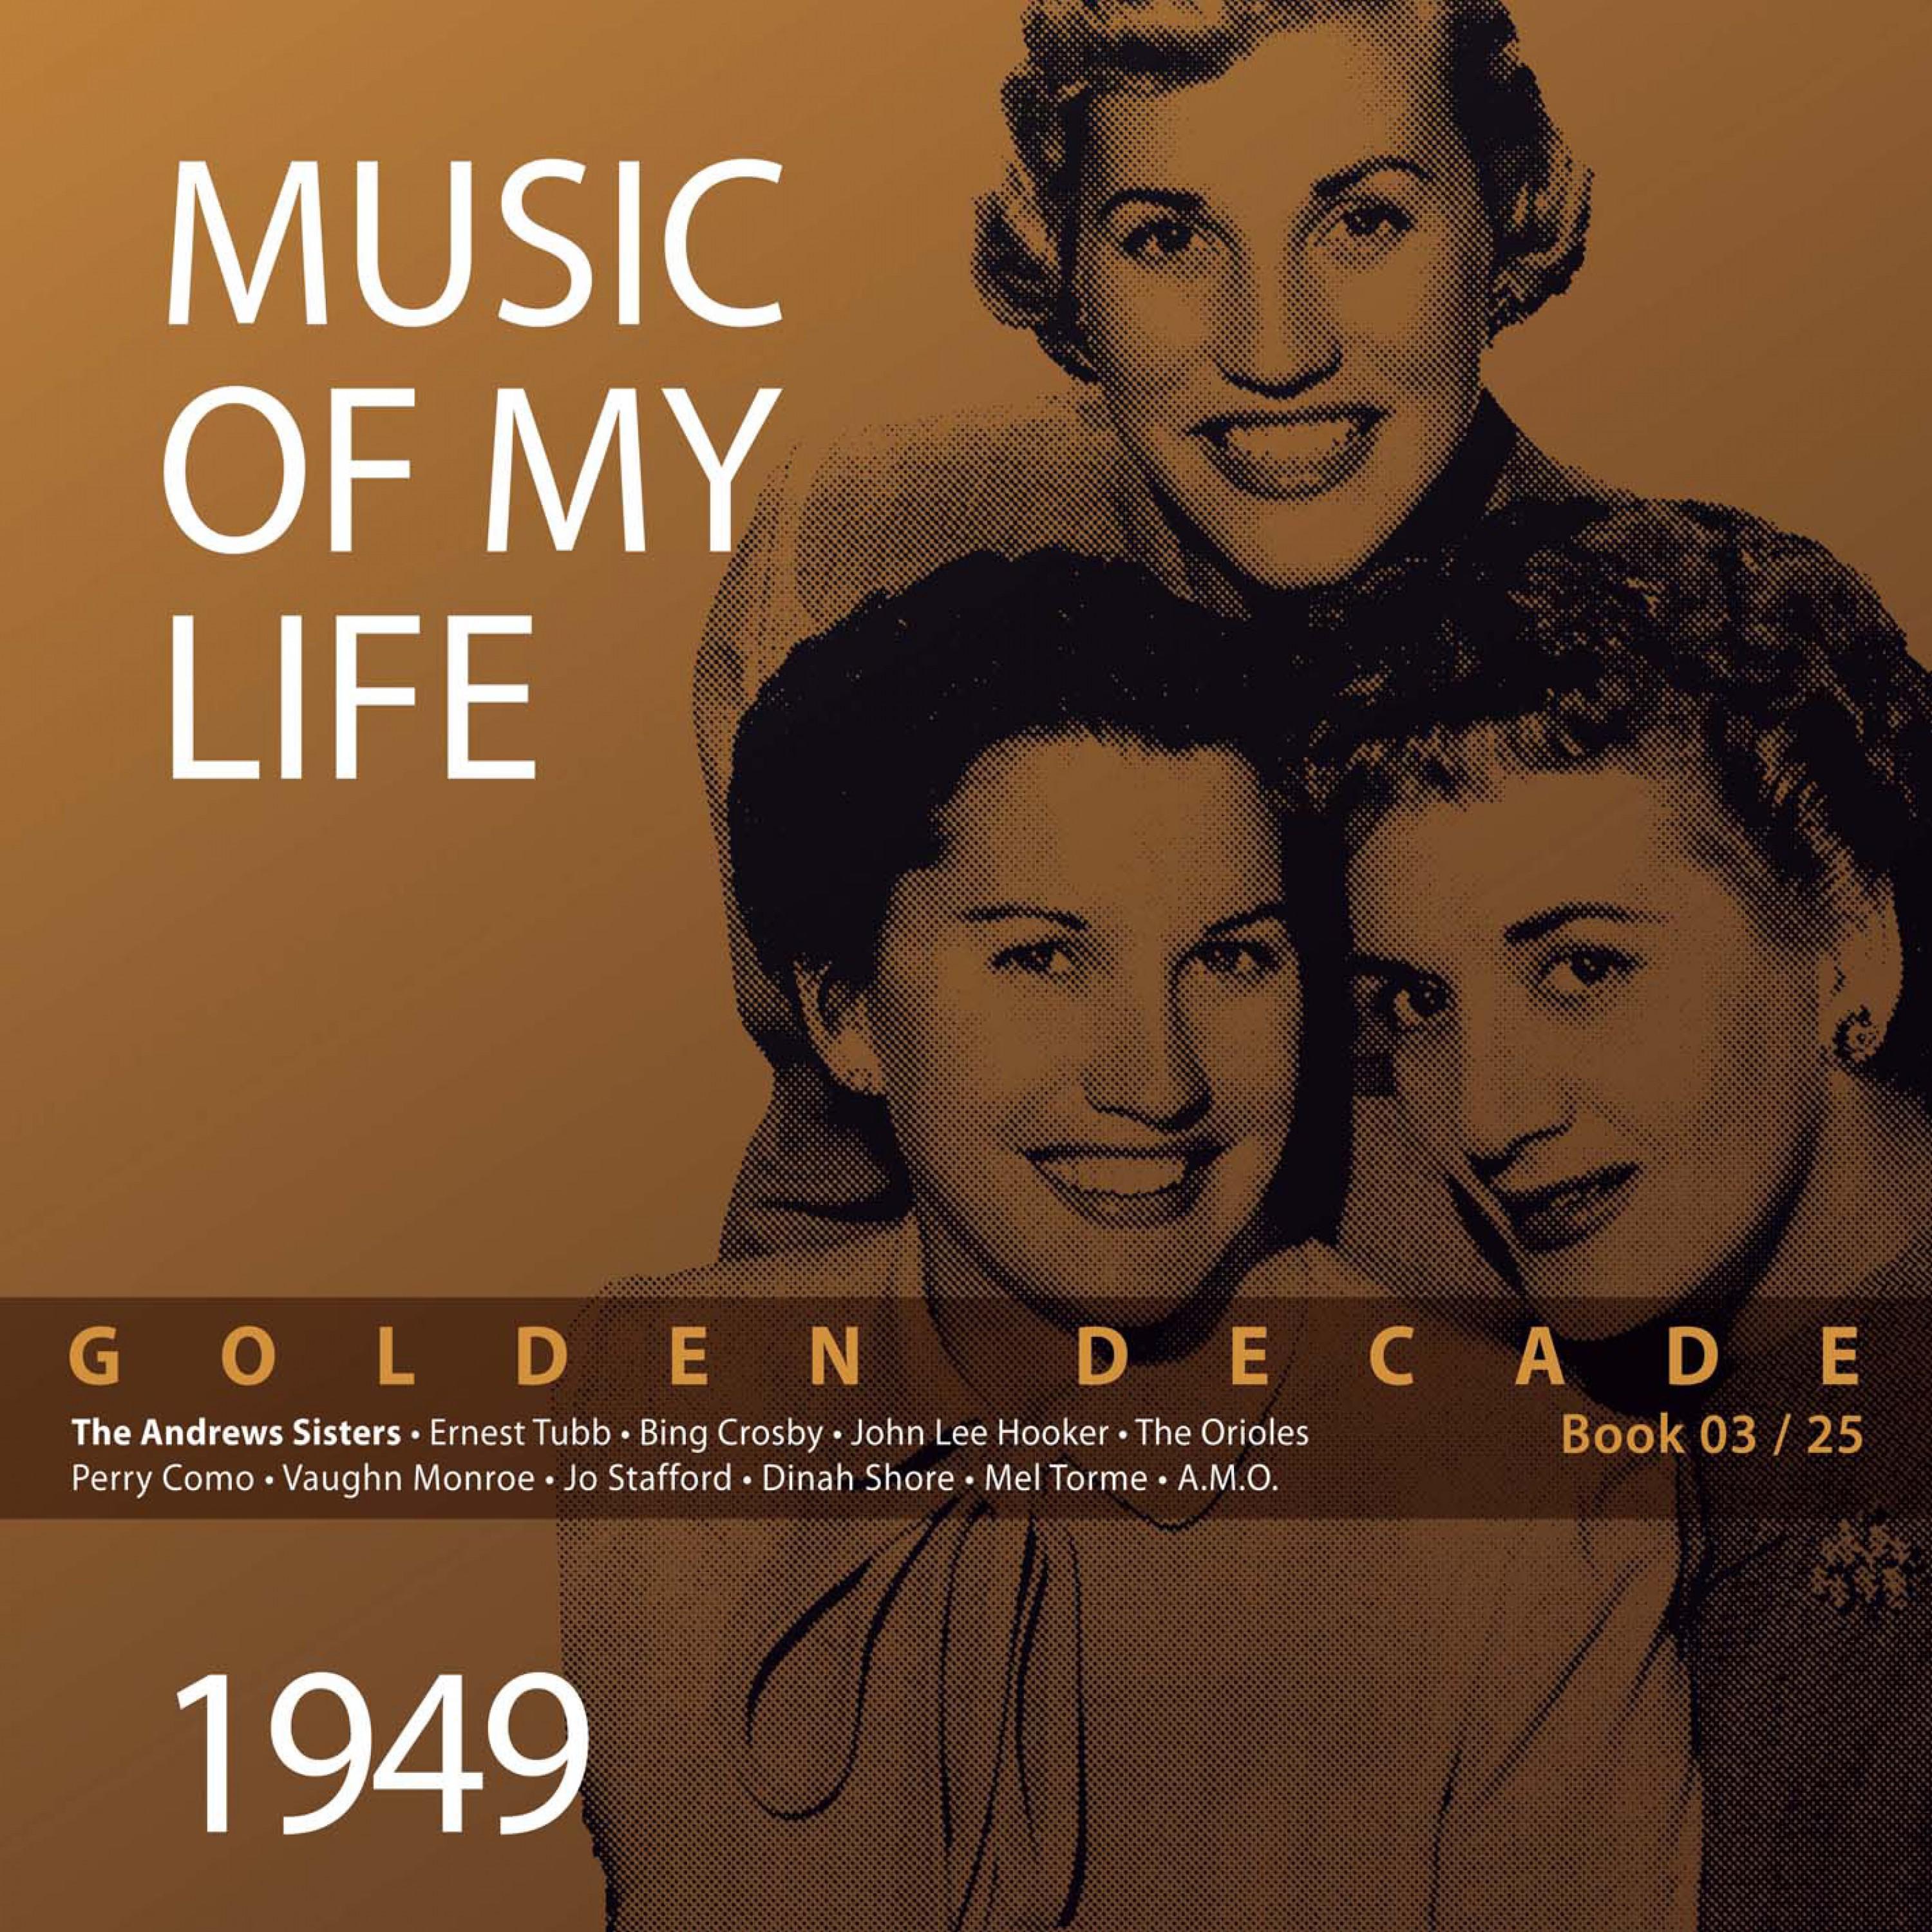 Golden Decade - Music of My Life (Book 03)